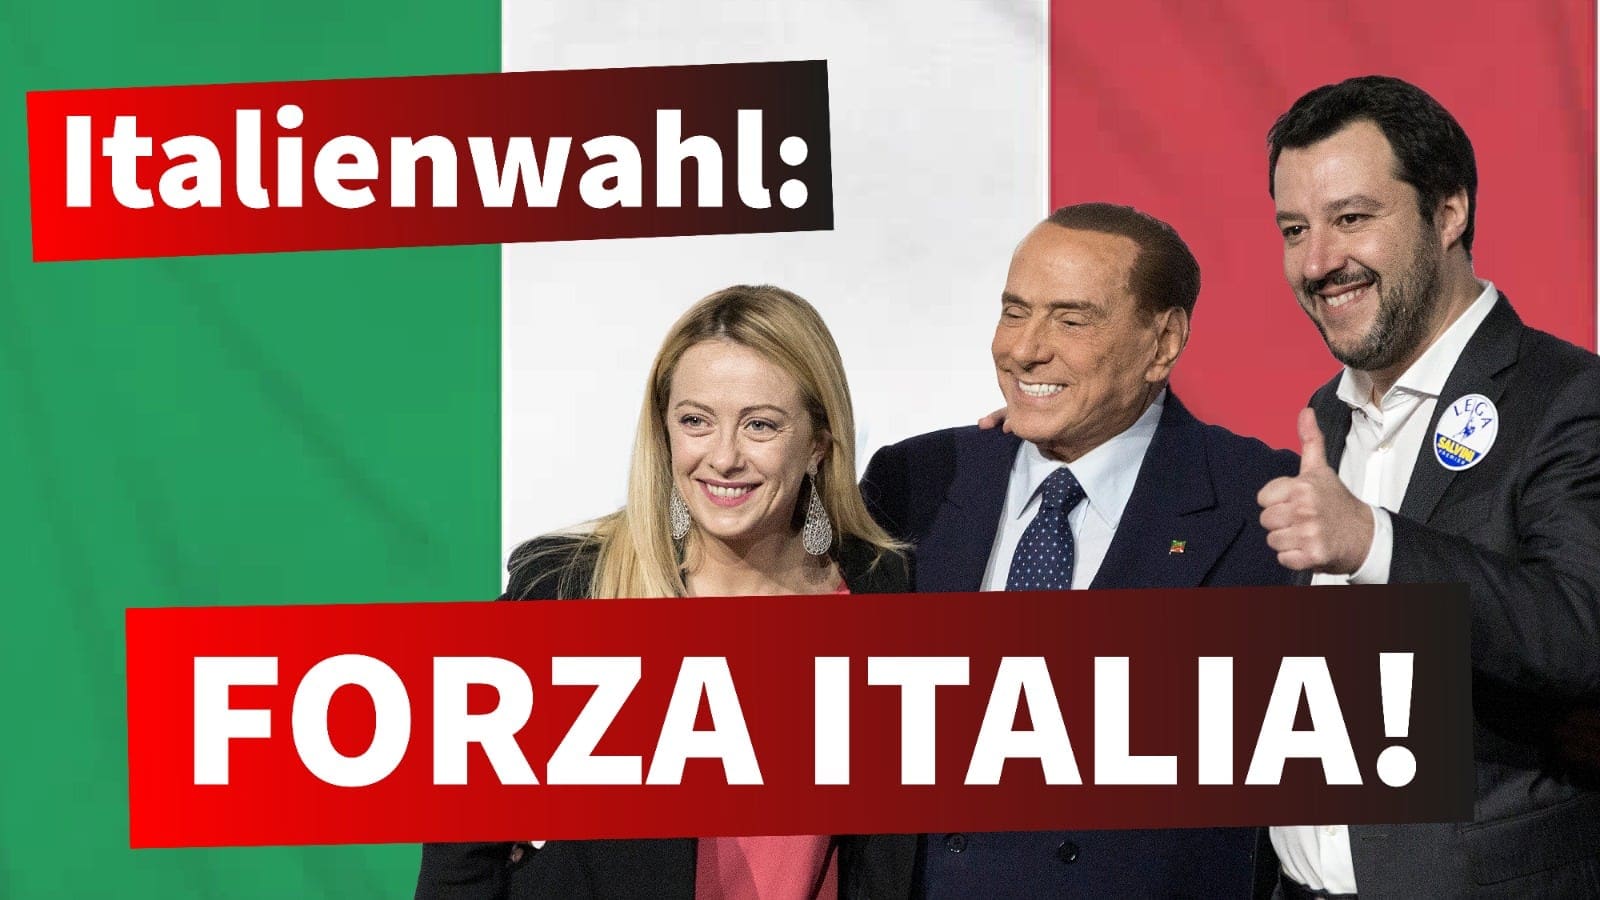 italienwahl: forza-italia! 